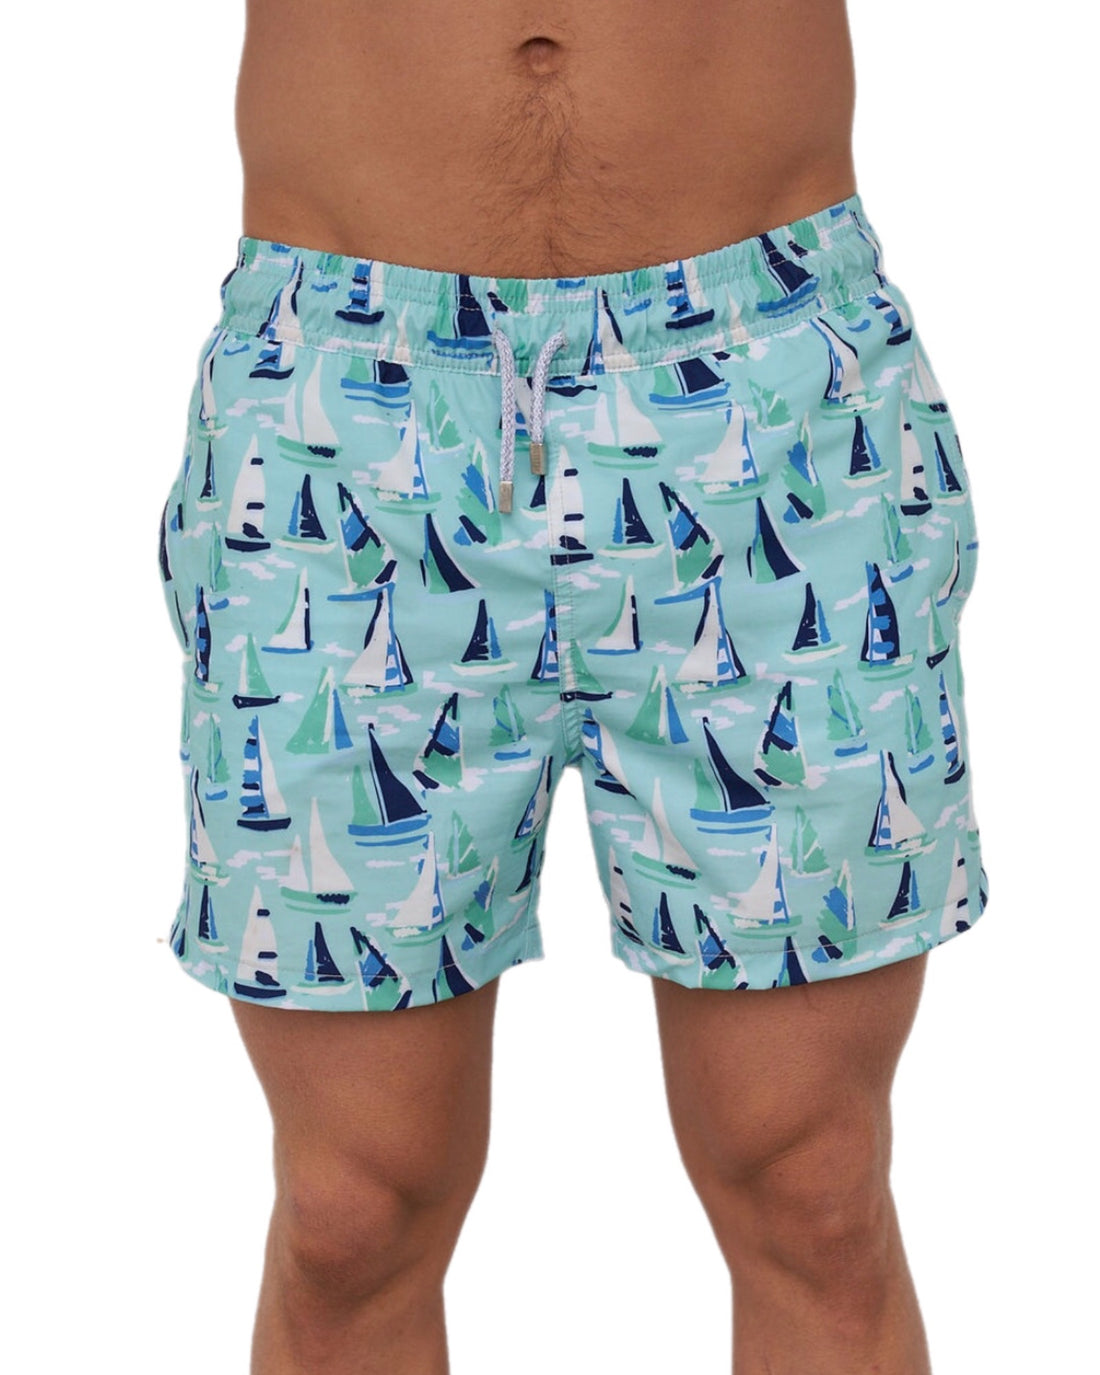 Pale blue boats shorts for men tolu australia